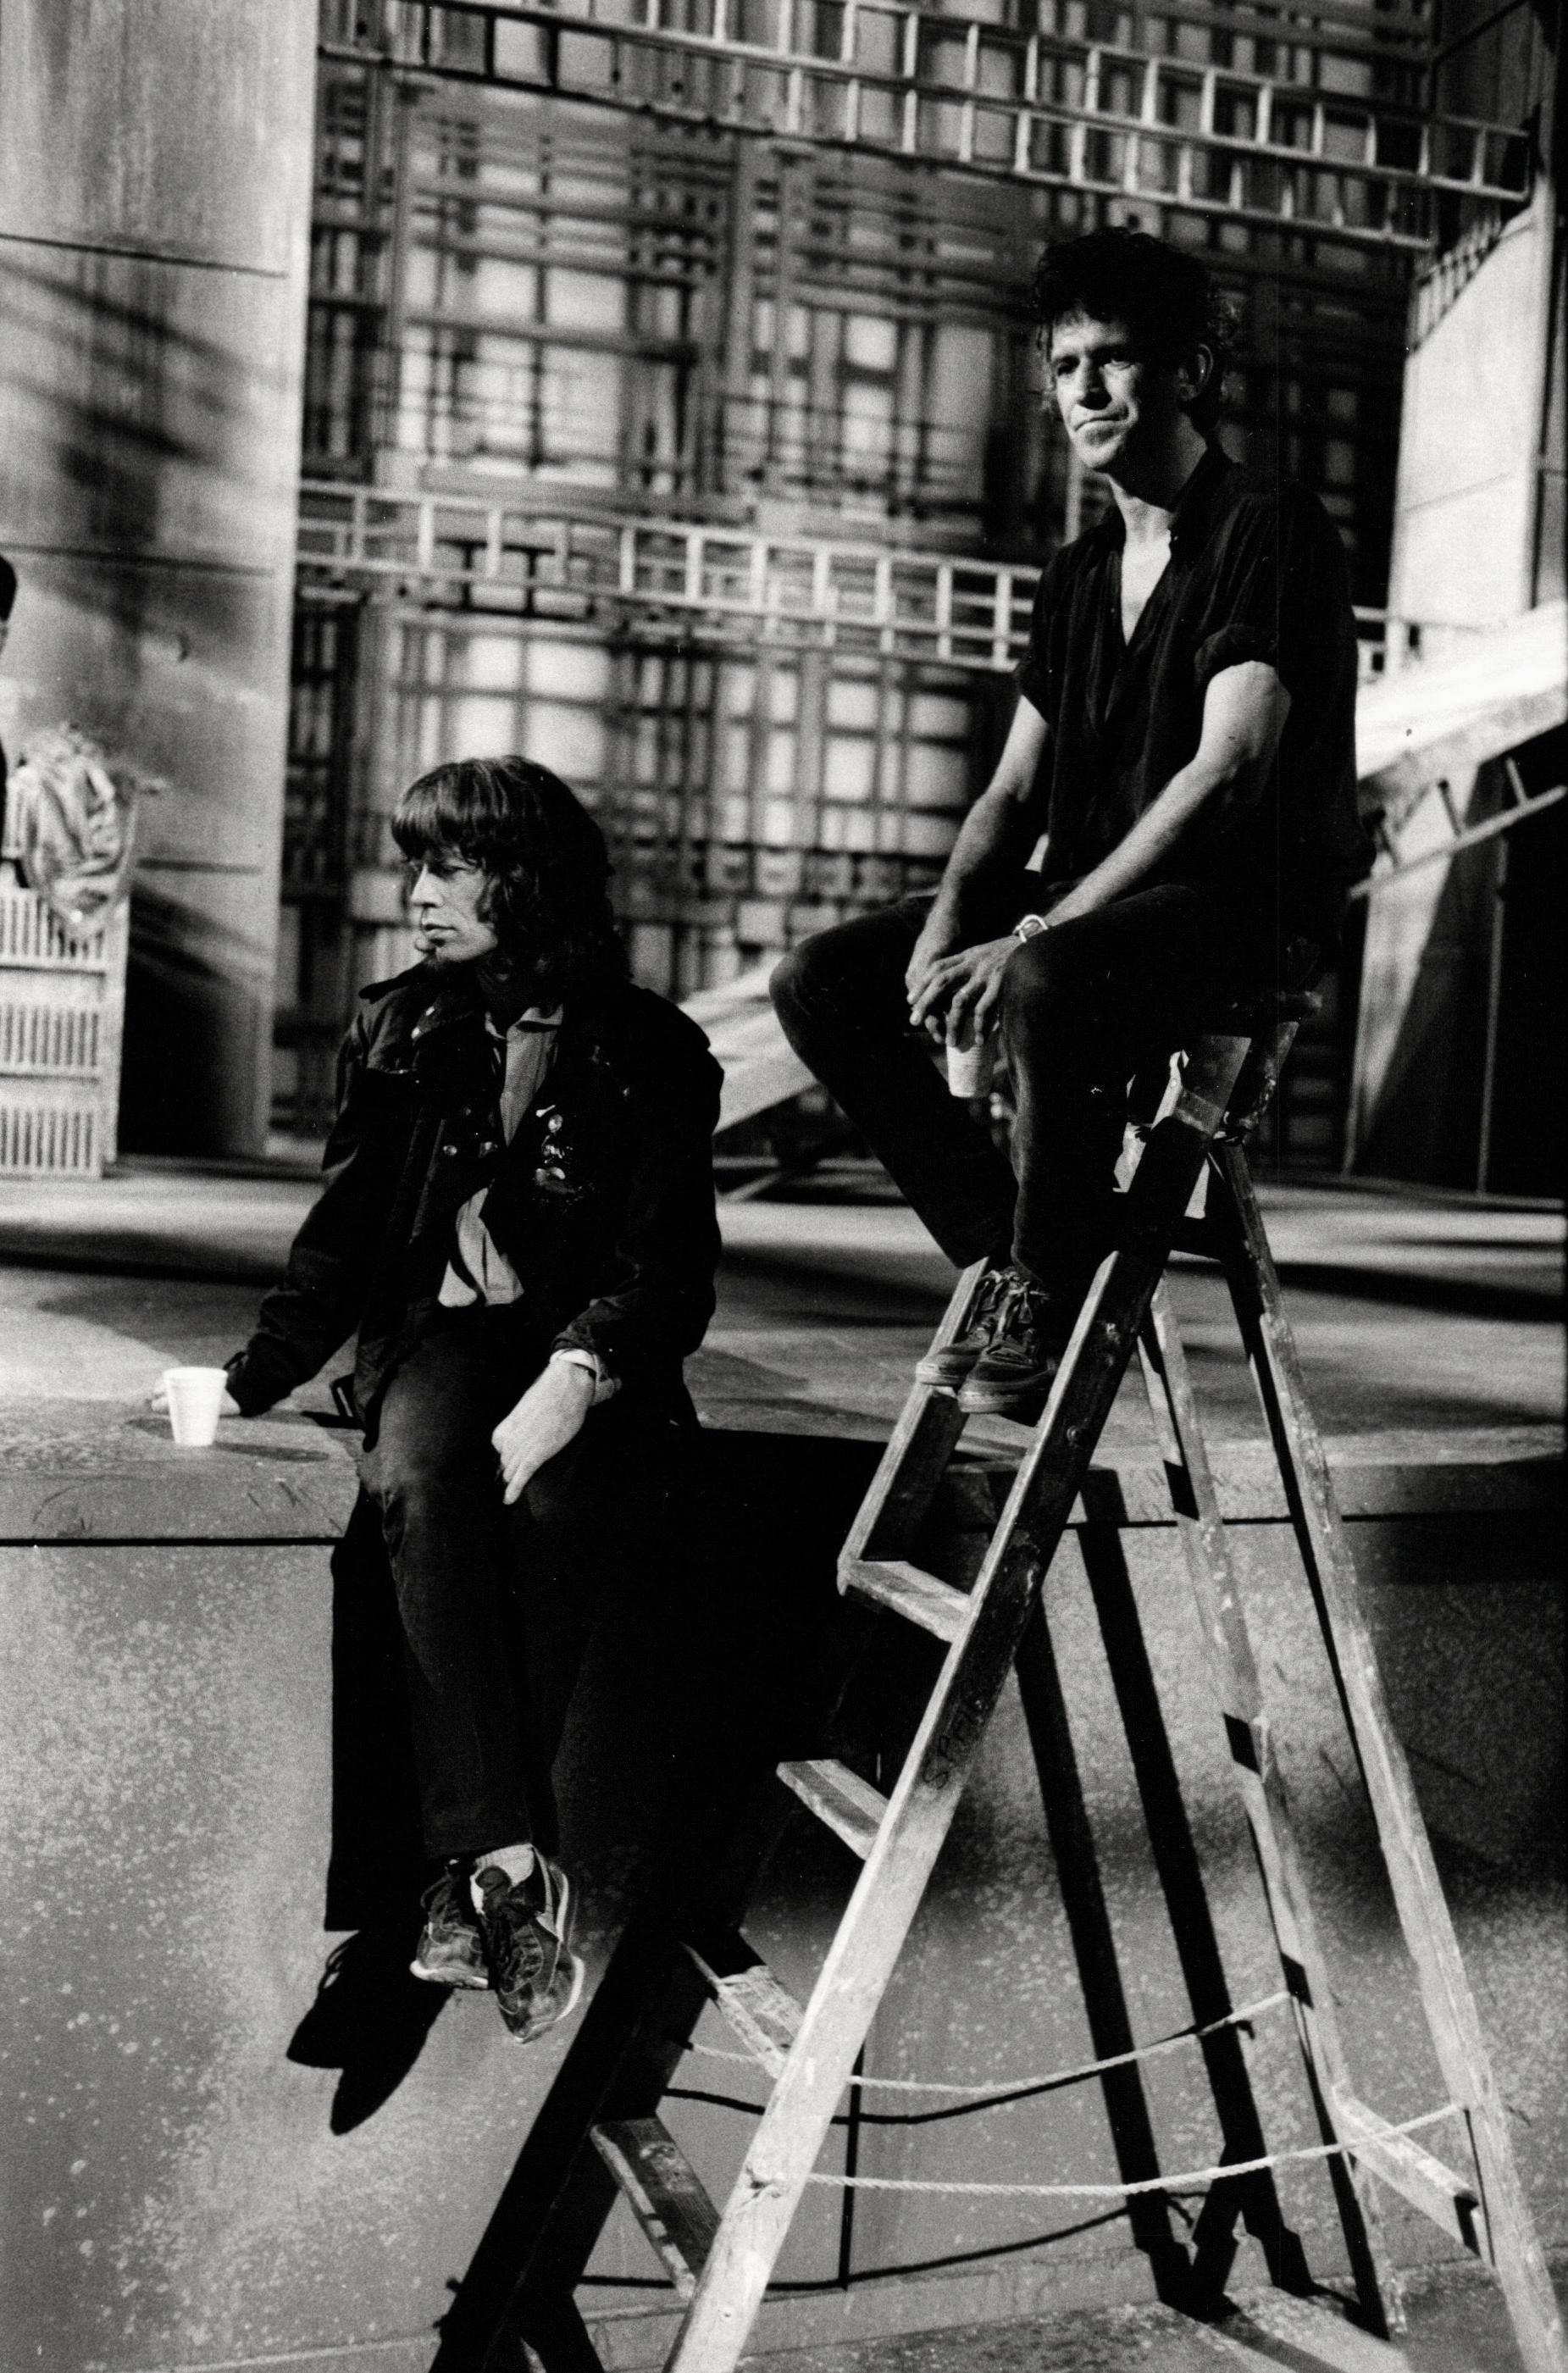 Michael Putland Portrait Photograph - Keith Richards and Mick Jagger on a Ladder Vintage Original Photograph